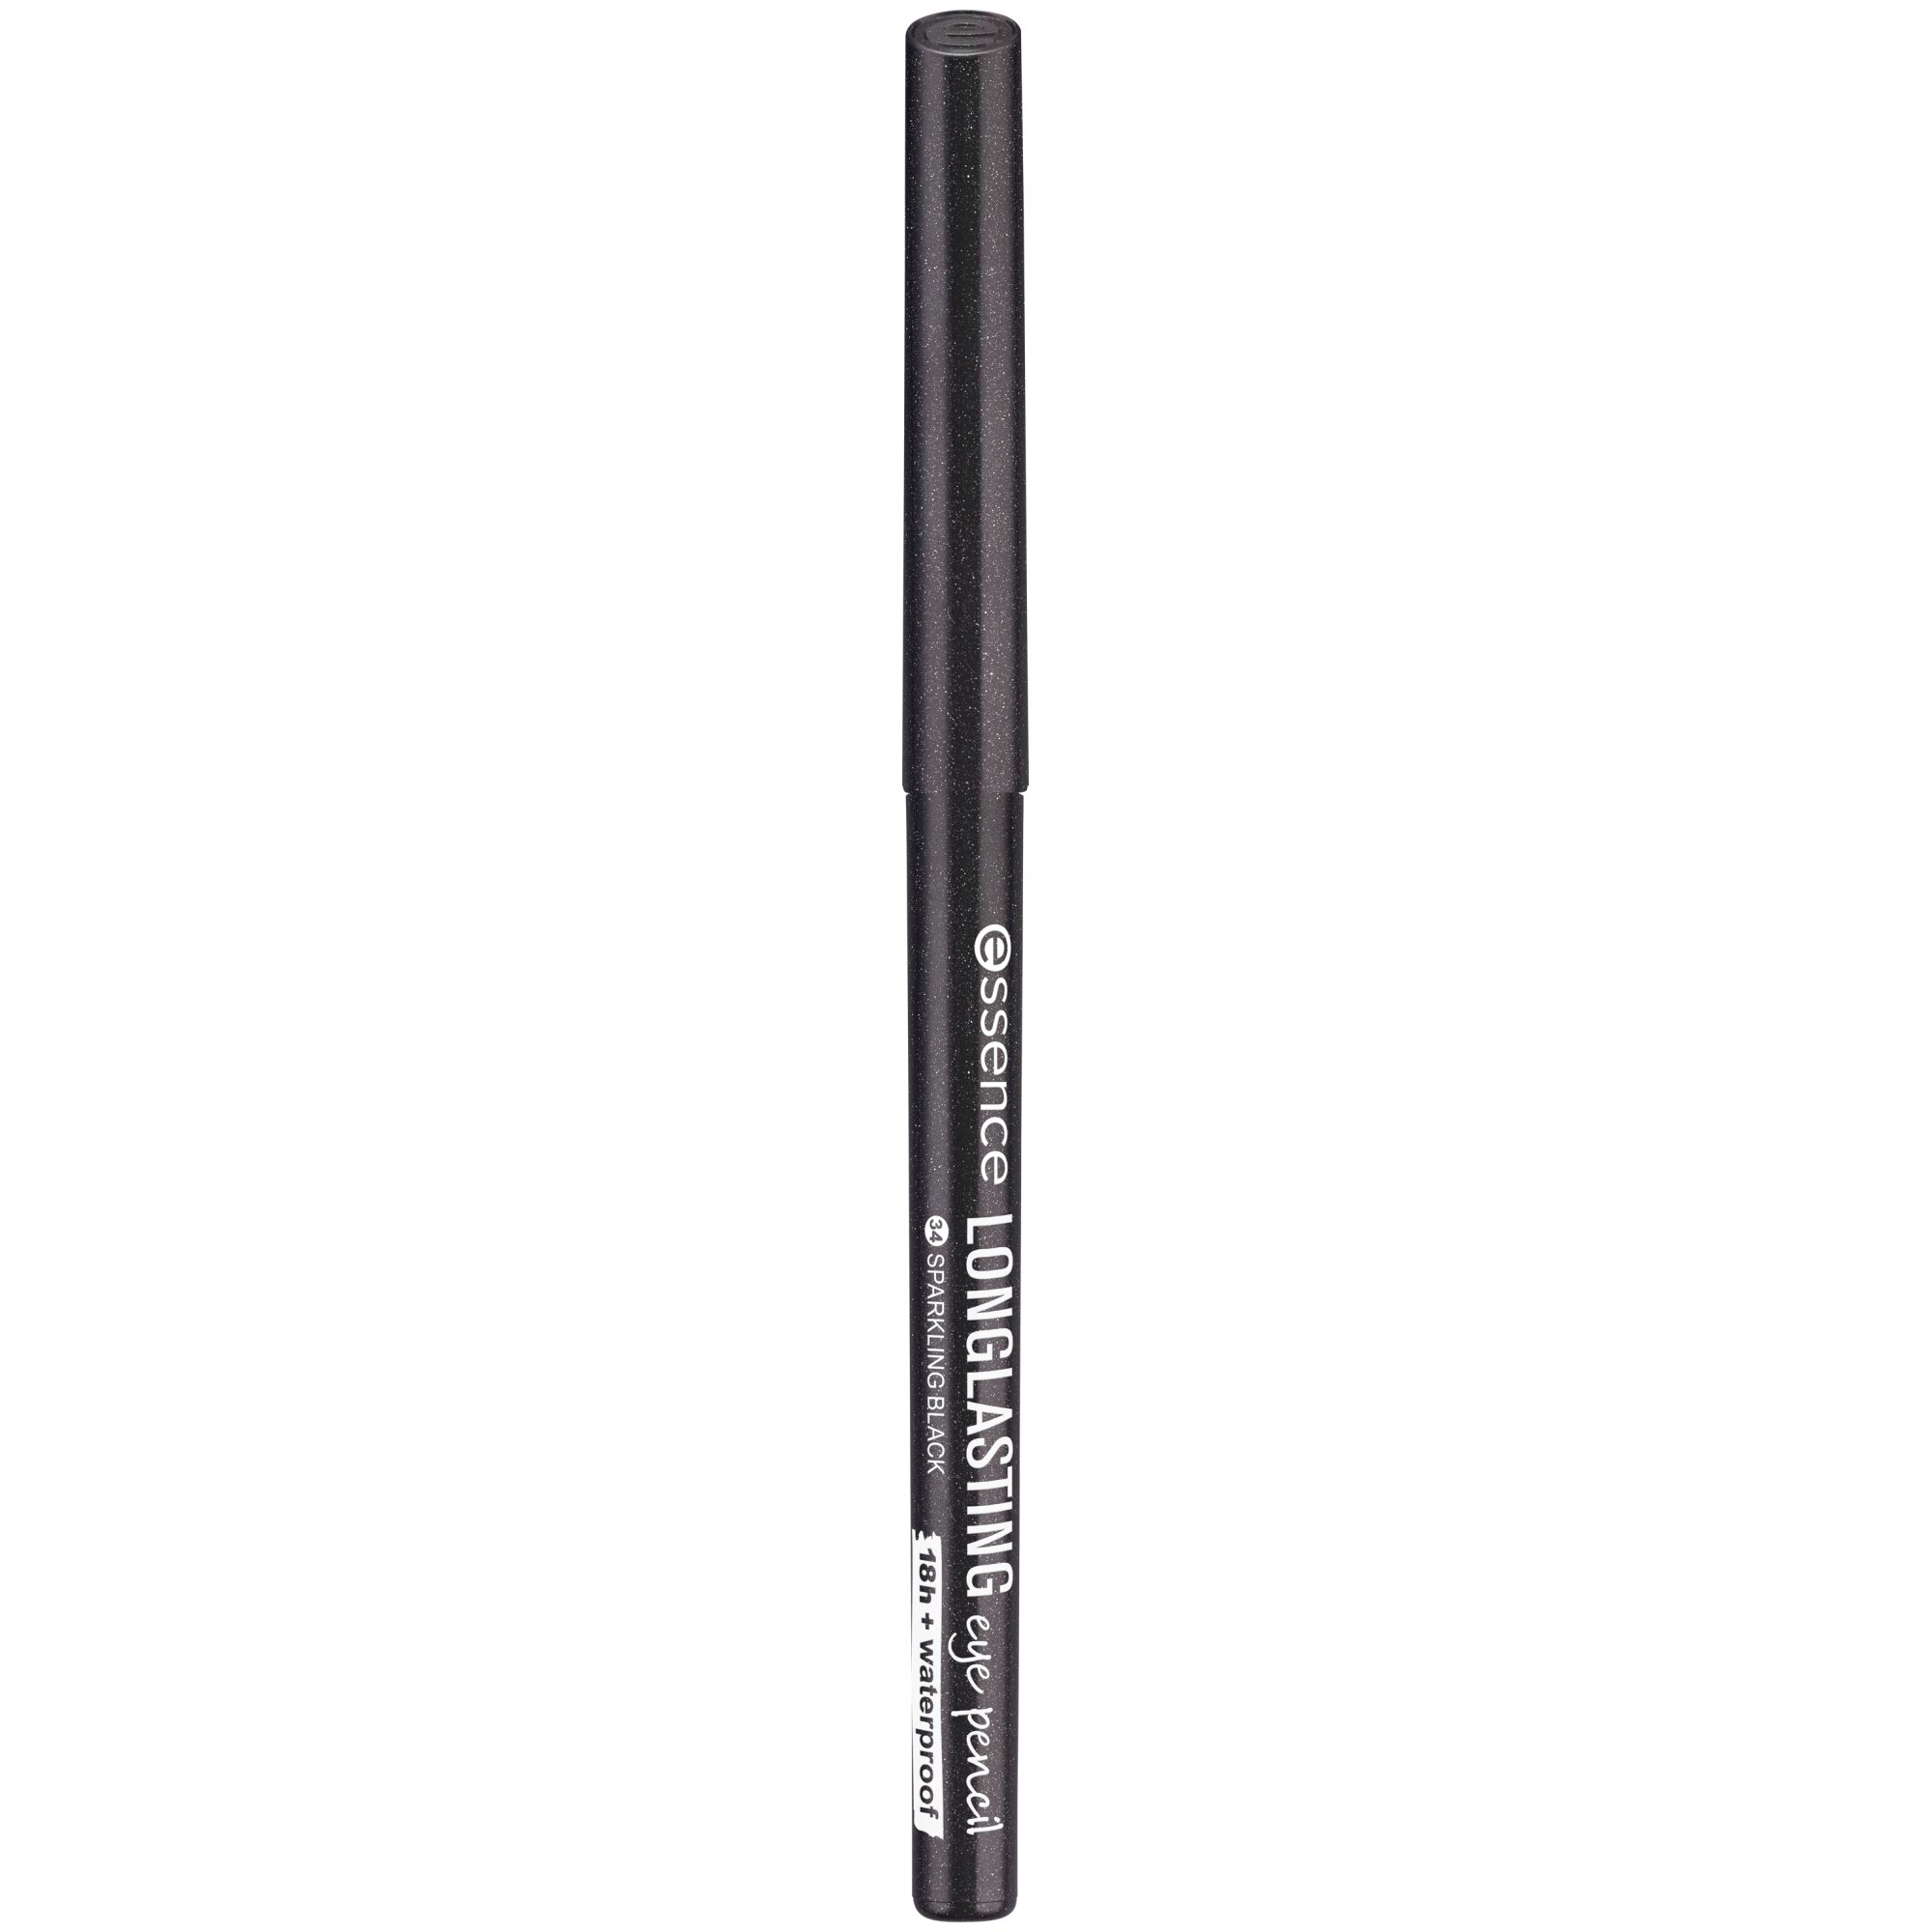 Creion pentru ochi Long-Lasting, 34 - Sparkling Black, 0.28 g, Essence